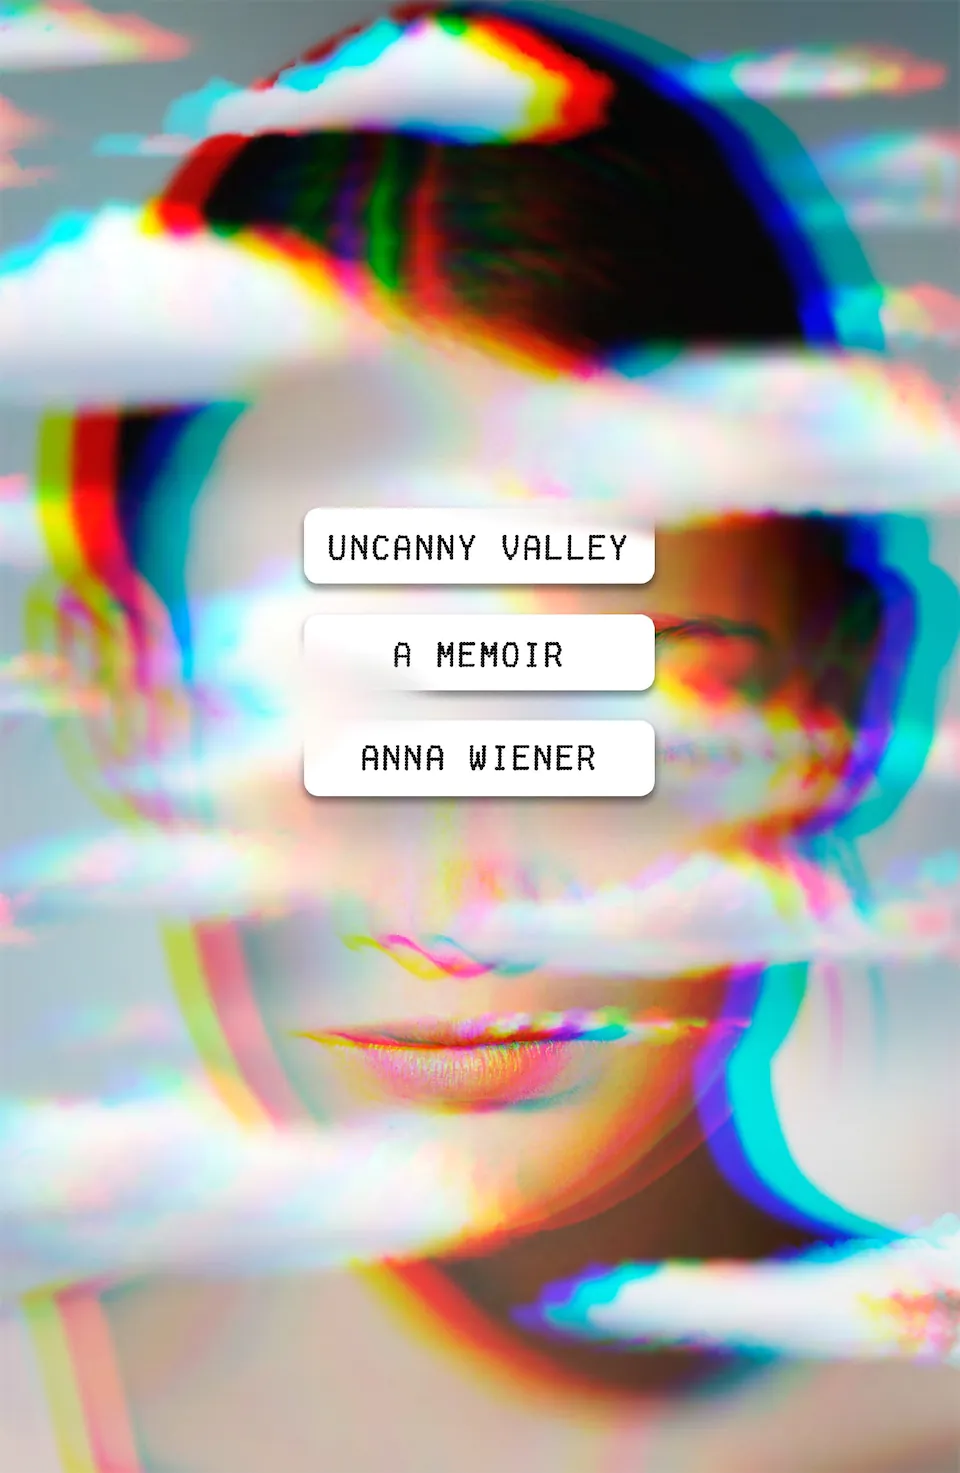 Uncanny Valley. A Memoir by Anna Wiener